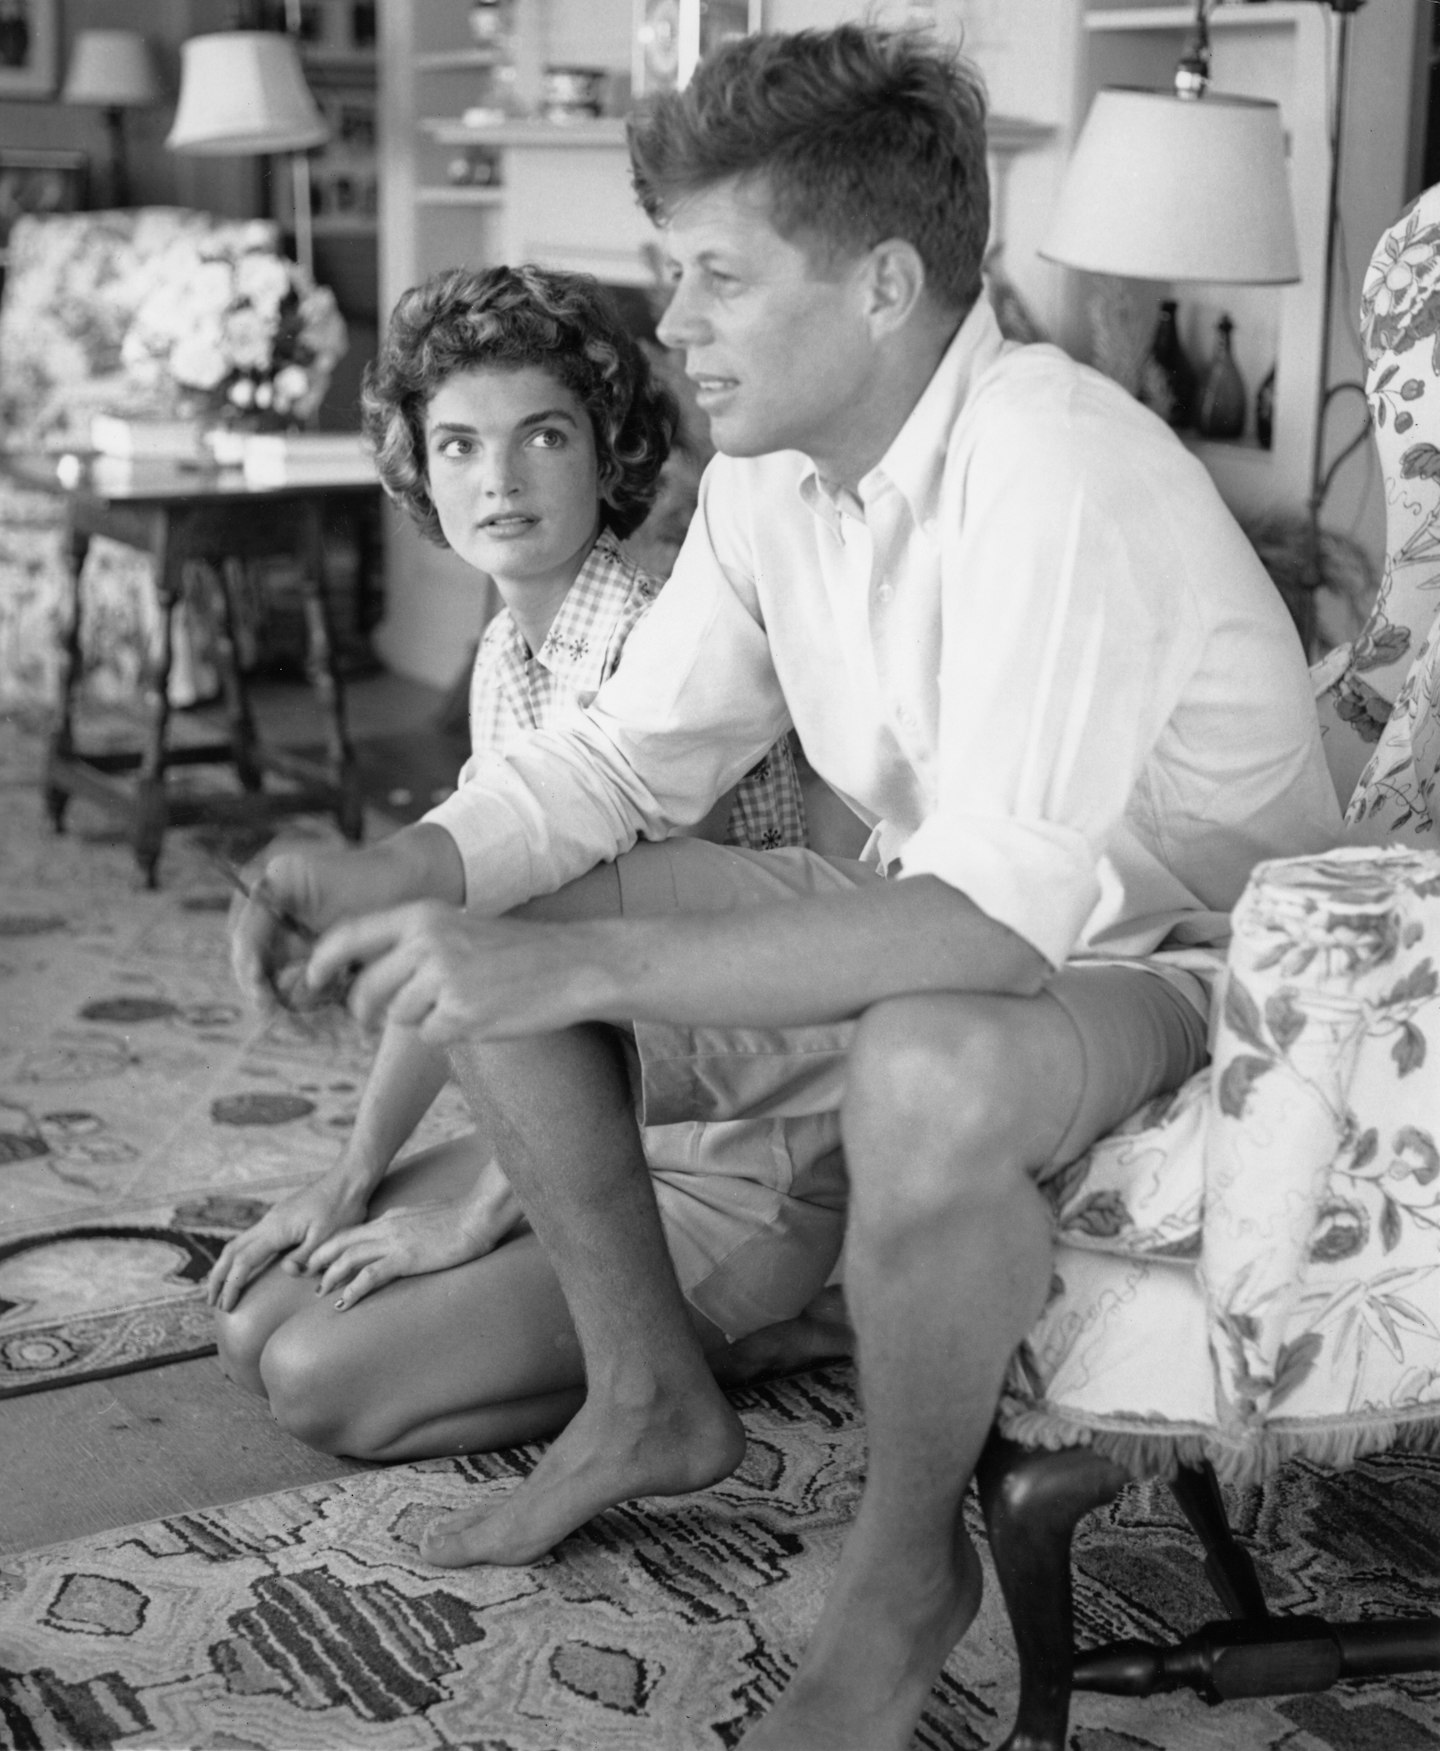 Jackie Kennedy and JFK